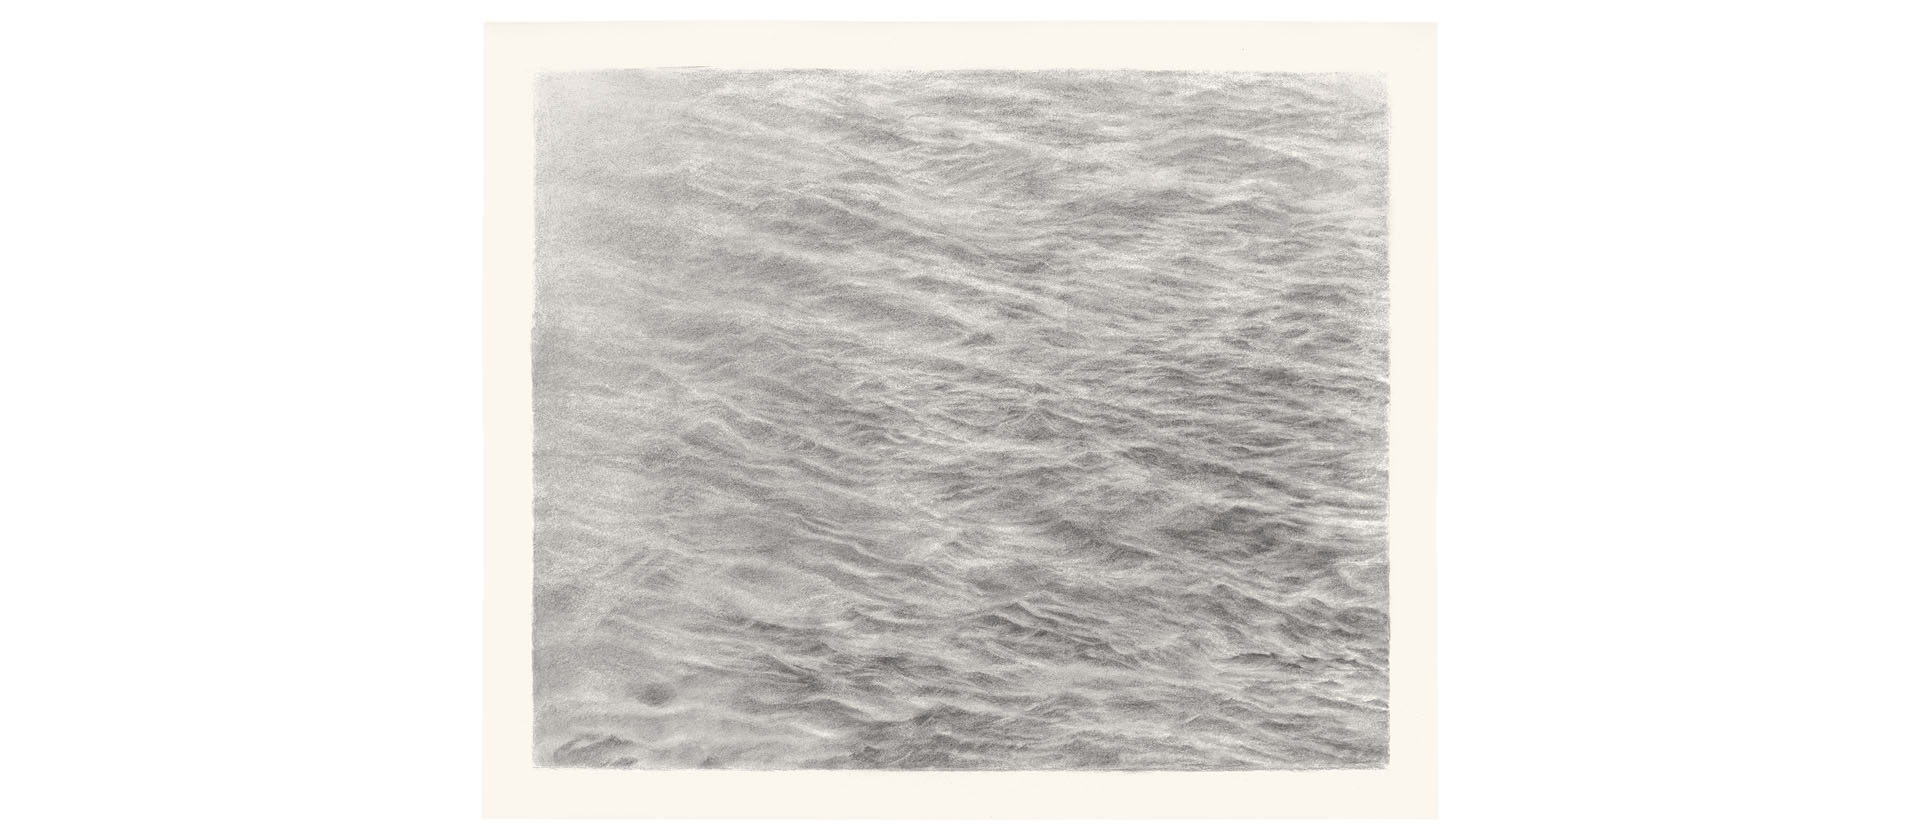 Vija Celmins, Untitled (Ocean), 2014, 39 x 47 cm, Jack Shear Collection, © Vija Celmins, Foto: Ron Amstutz, Courtesy Matthew Marks Gallery